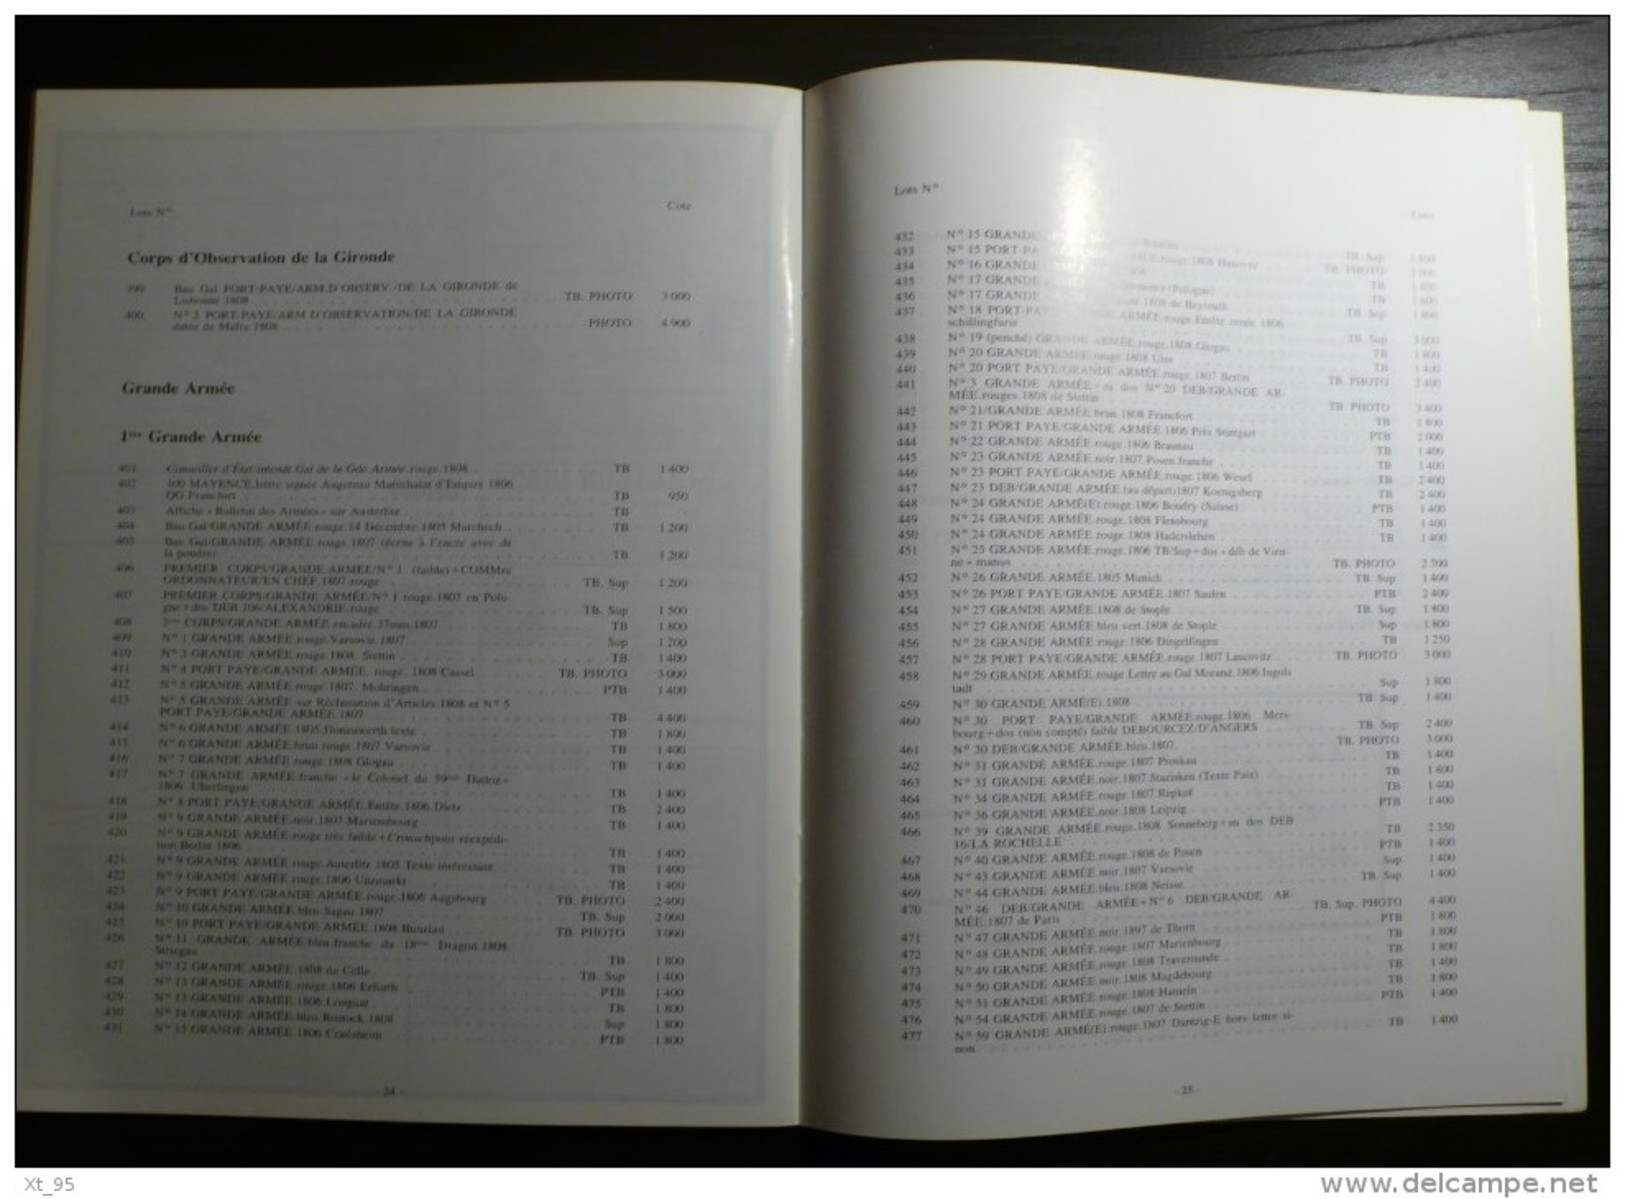 Vente Aux Encheres Collection Dubus - 1988 - 40 Pages - Catalogues For Auction Houses